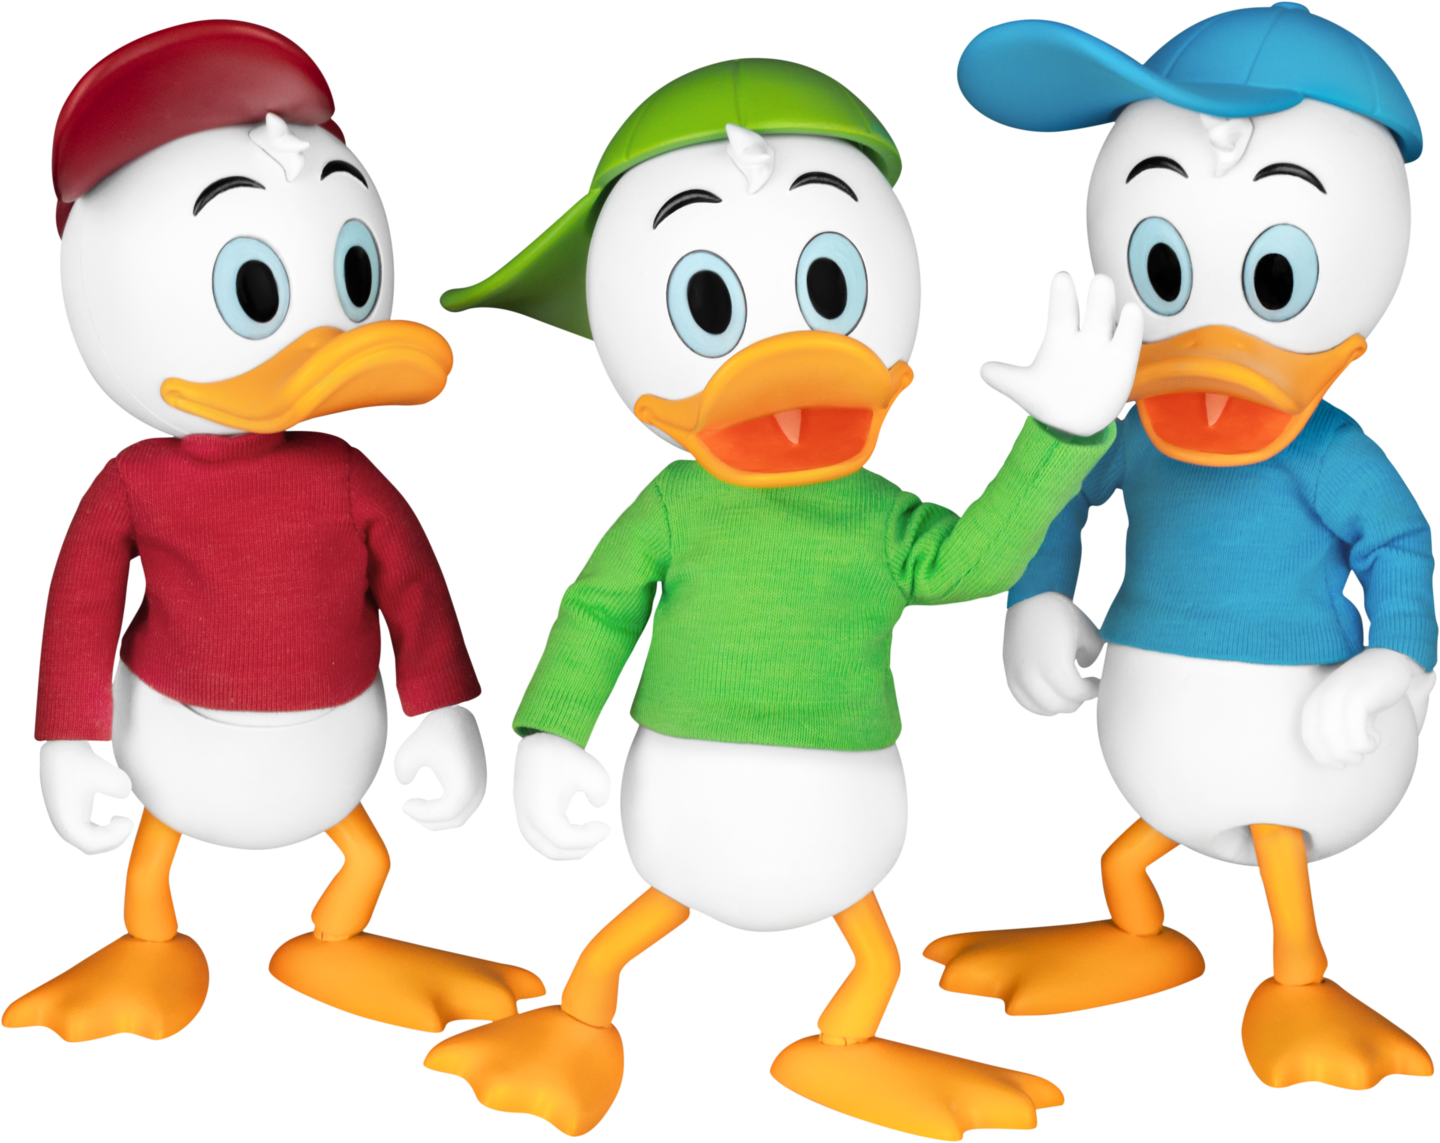 DuckTales, Meet Huey, Dewey and Louie